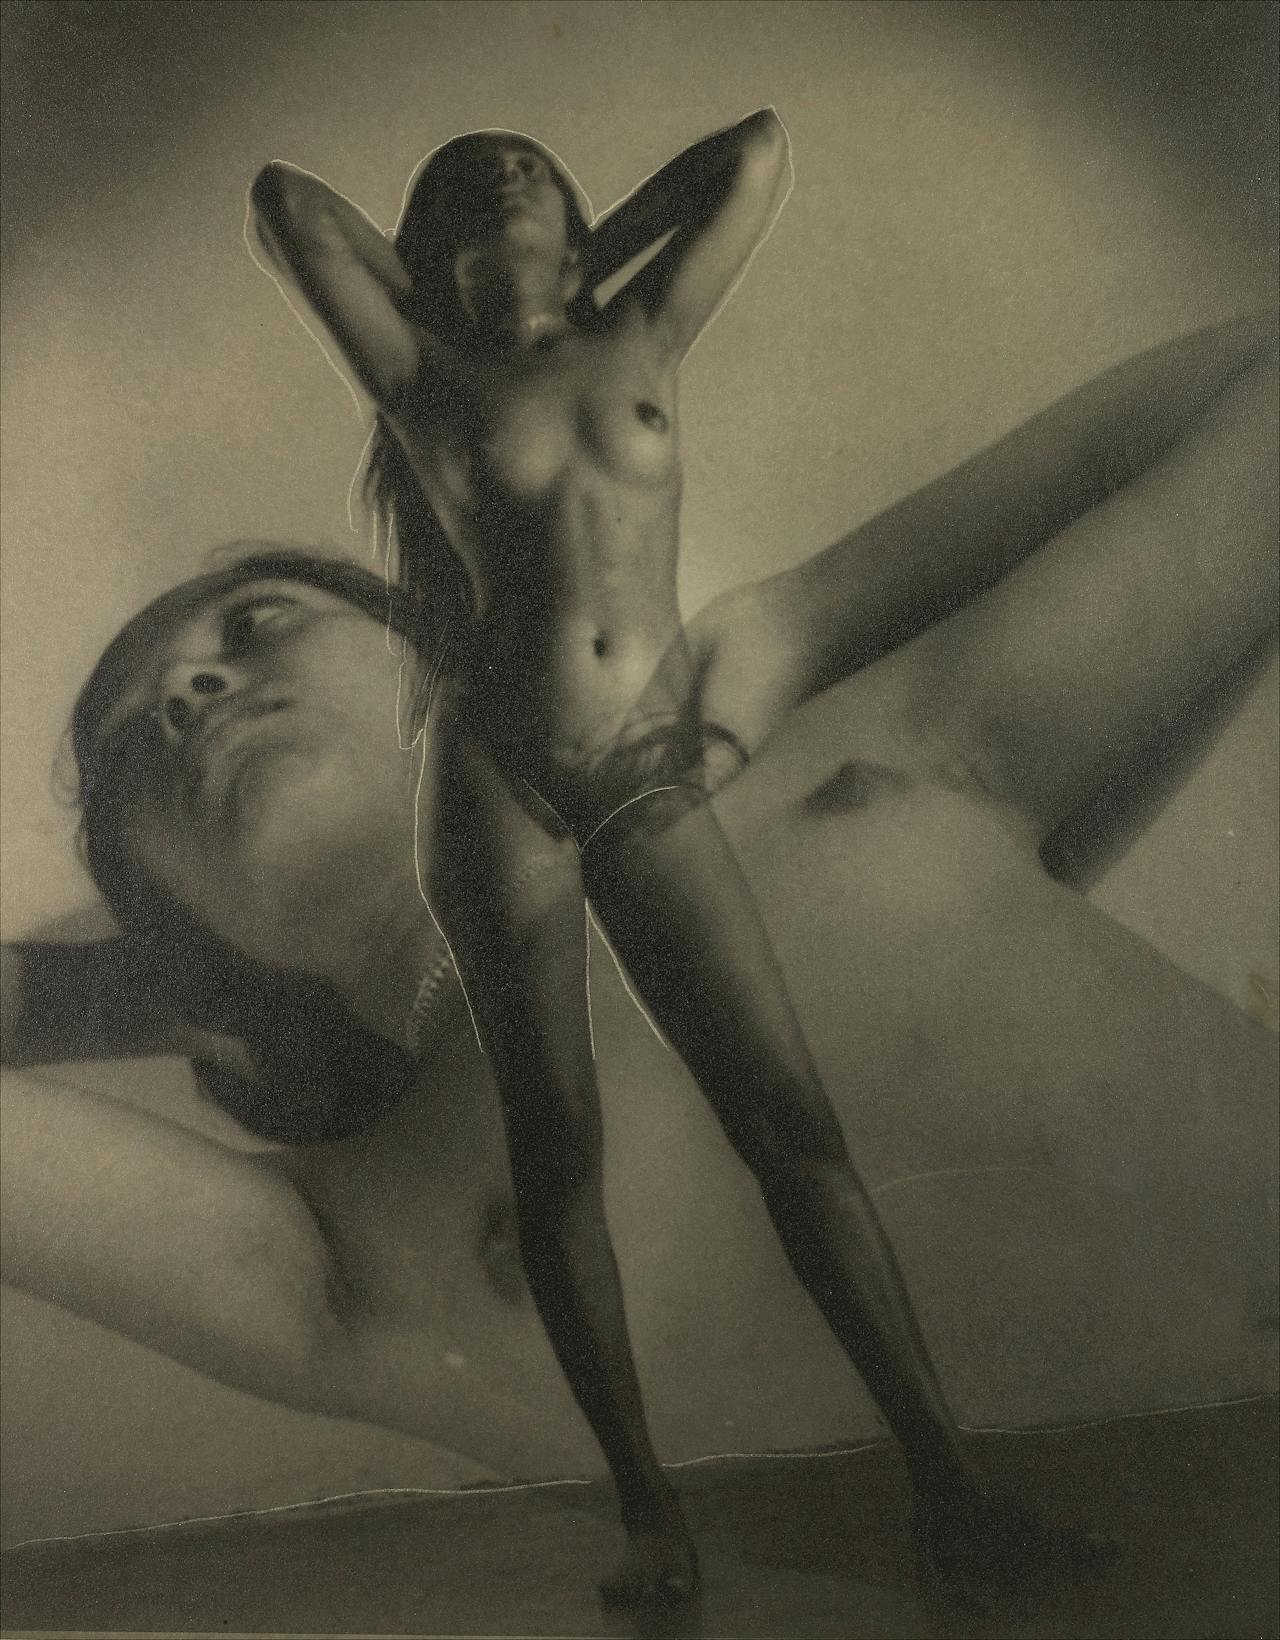 ‘Opiate Dreams’/‘Nudes’, ca. 1936, ontwikkelgelatine-zilverdruk, montage.